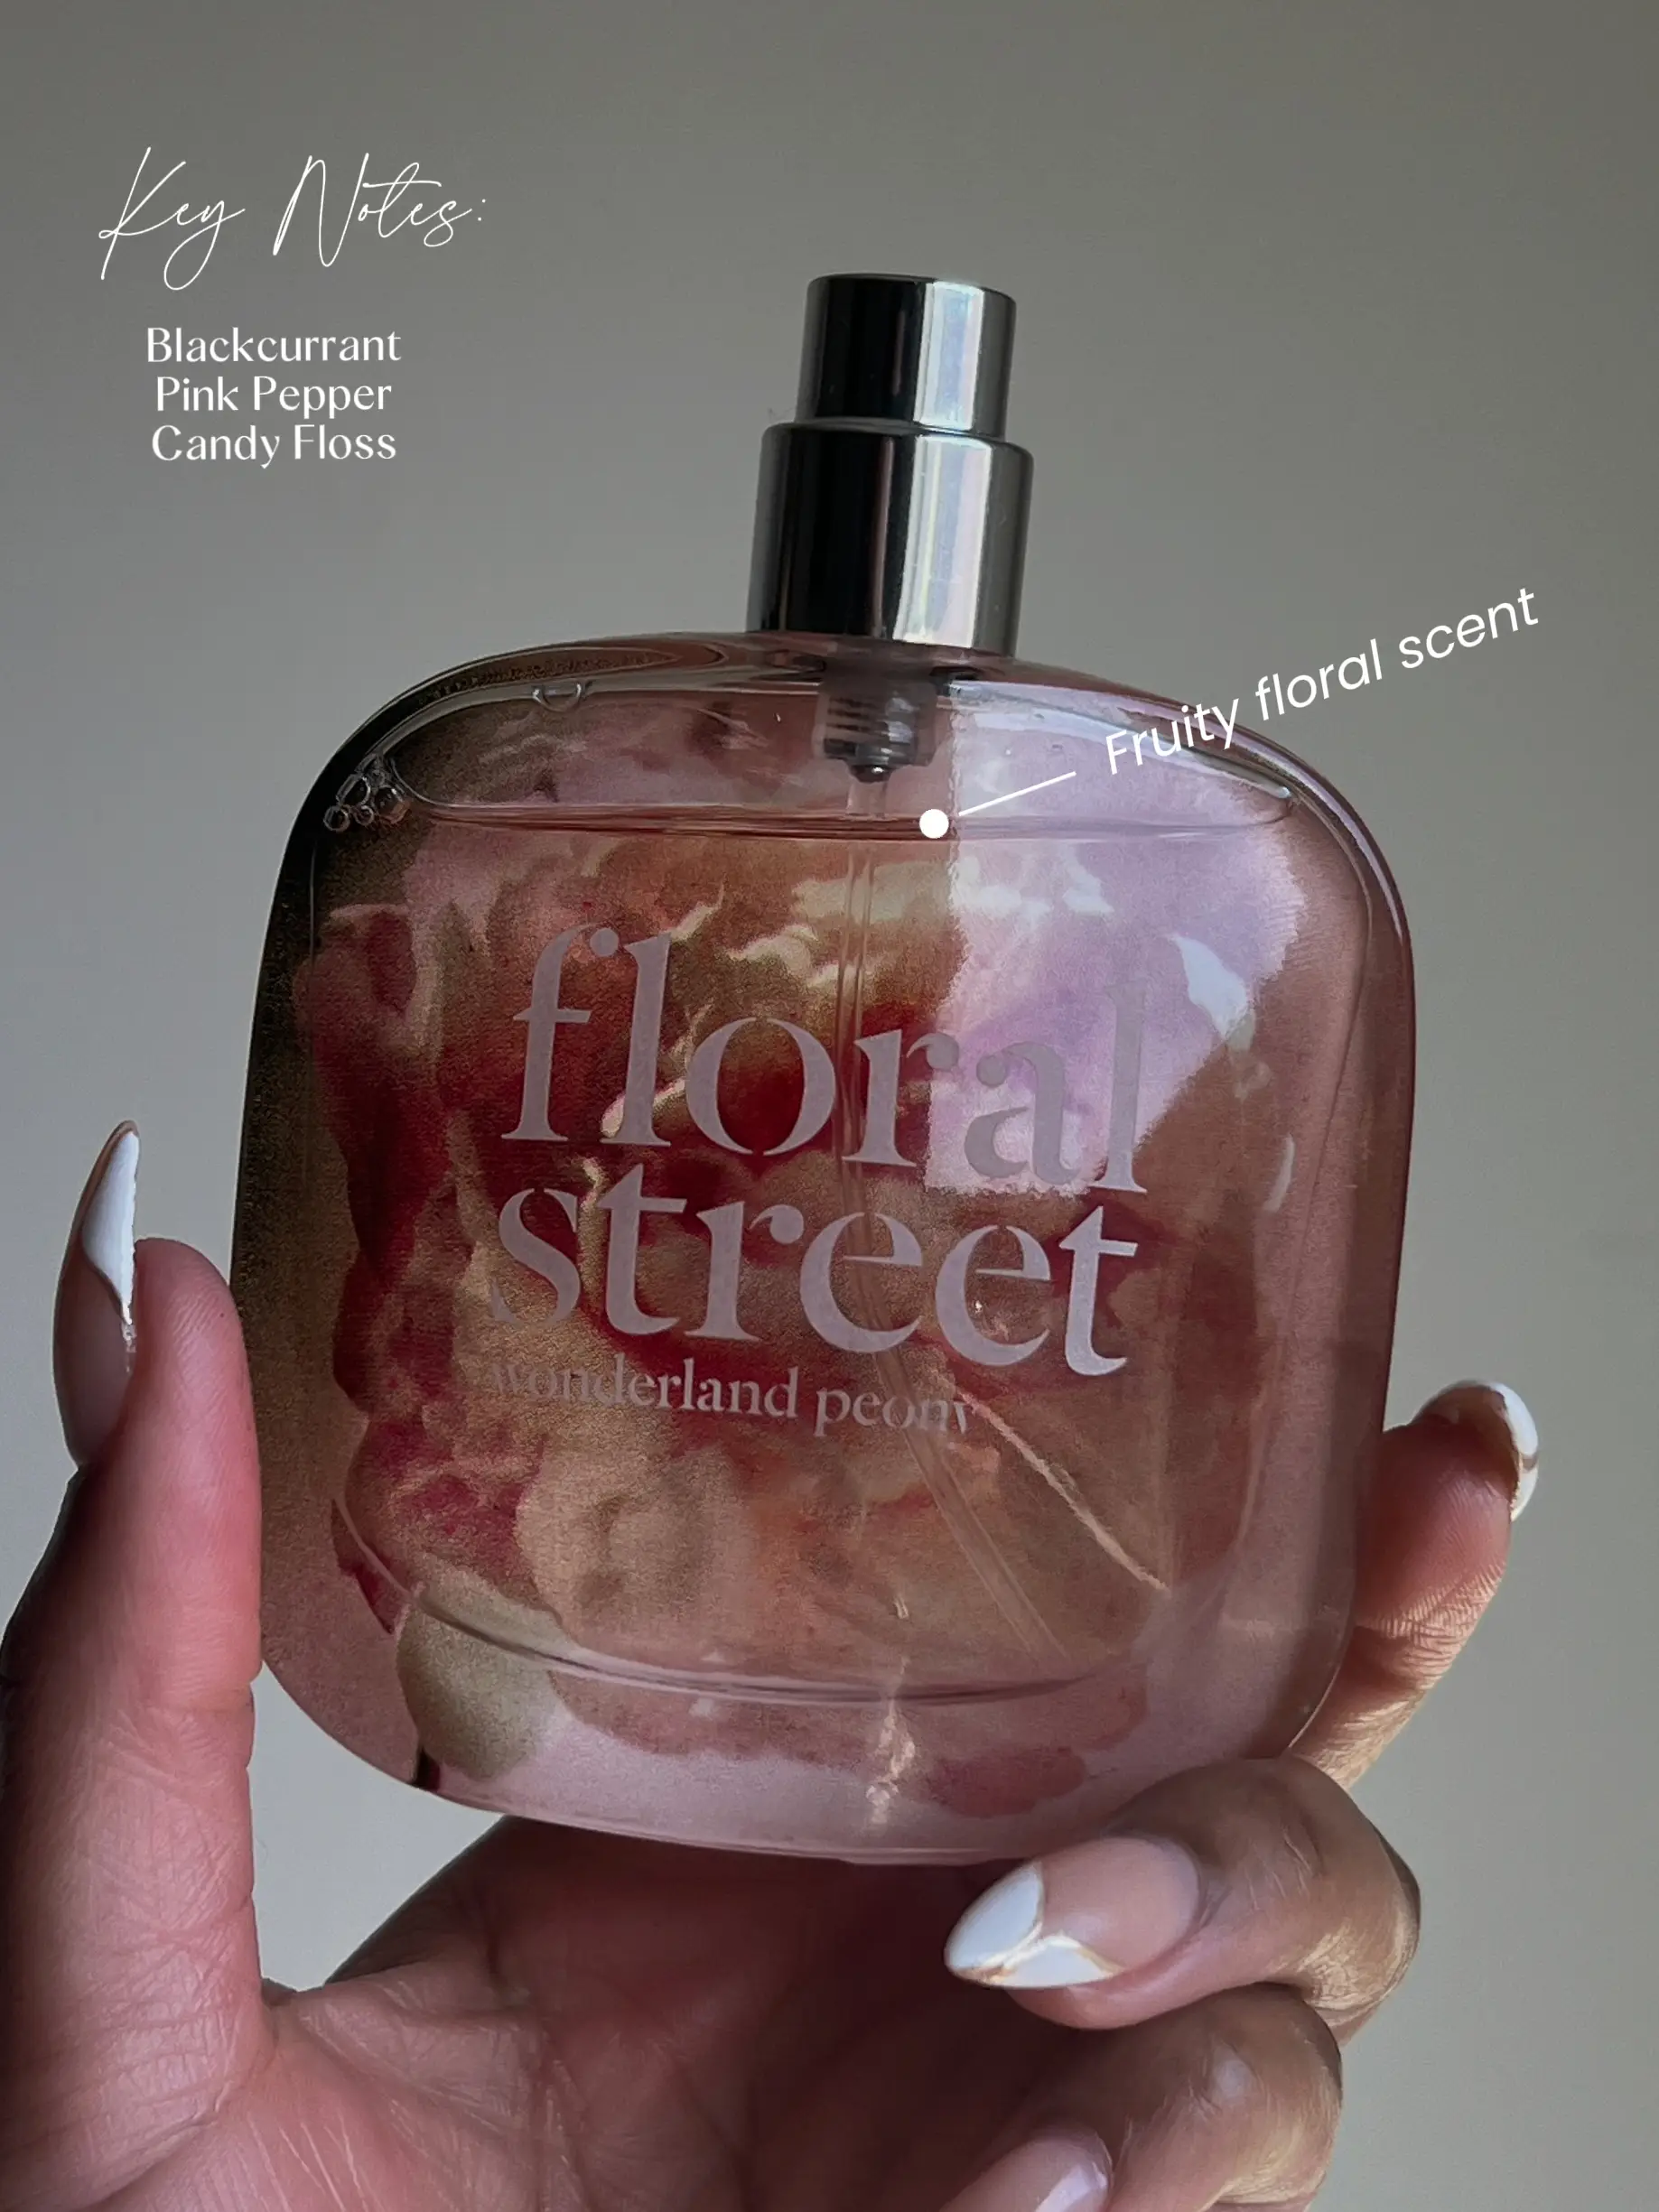 Louis Vuitton Attrape-Reves Perfume Eau de Parfum 3.4 oz Spray.